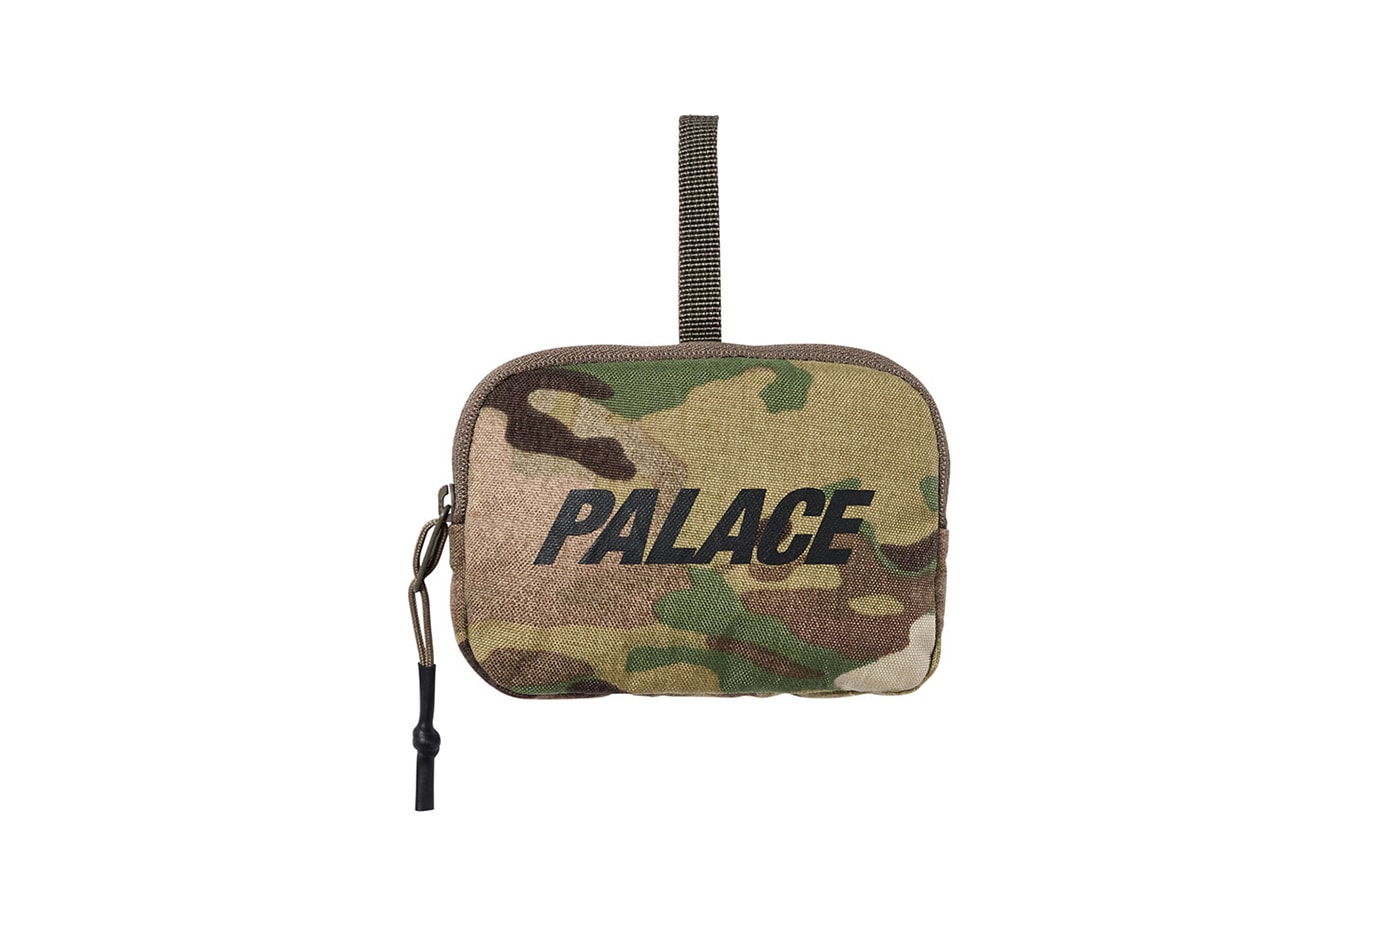 Palace Autumn 2019 Accessories & Hardware